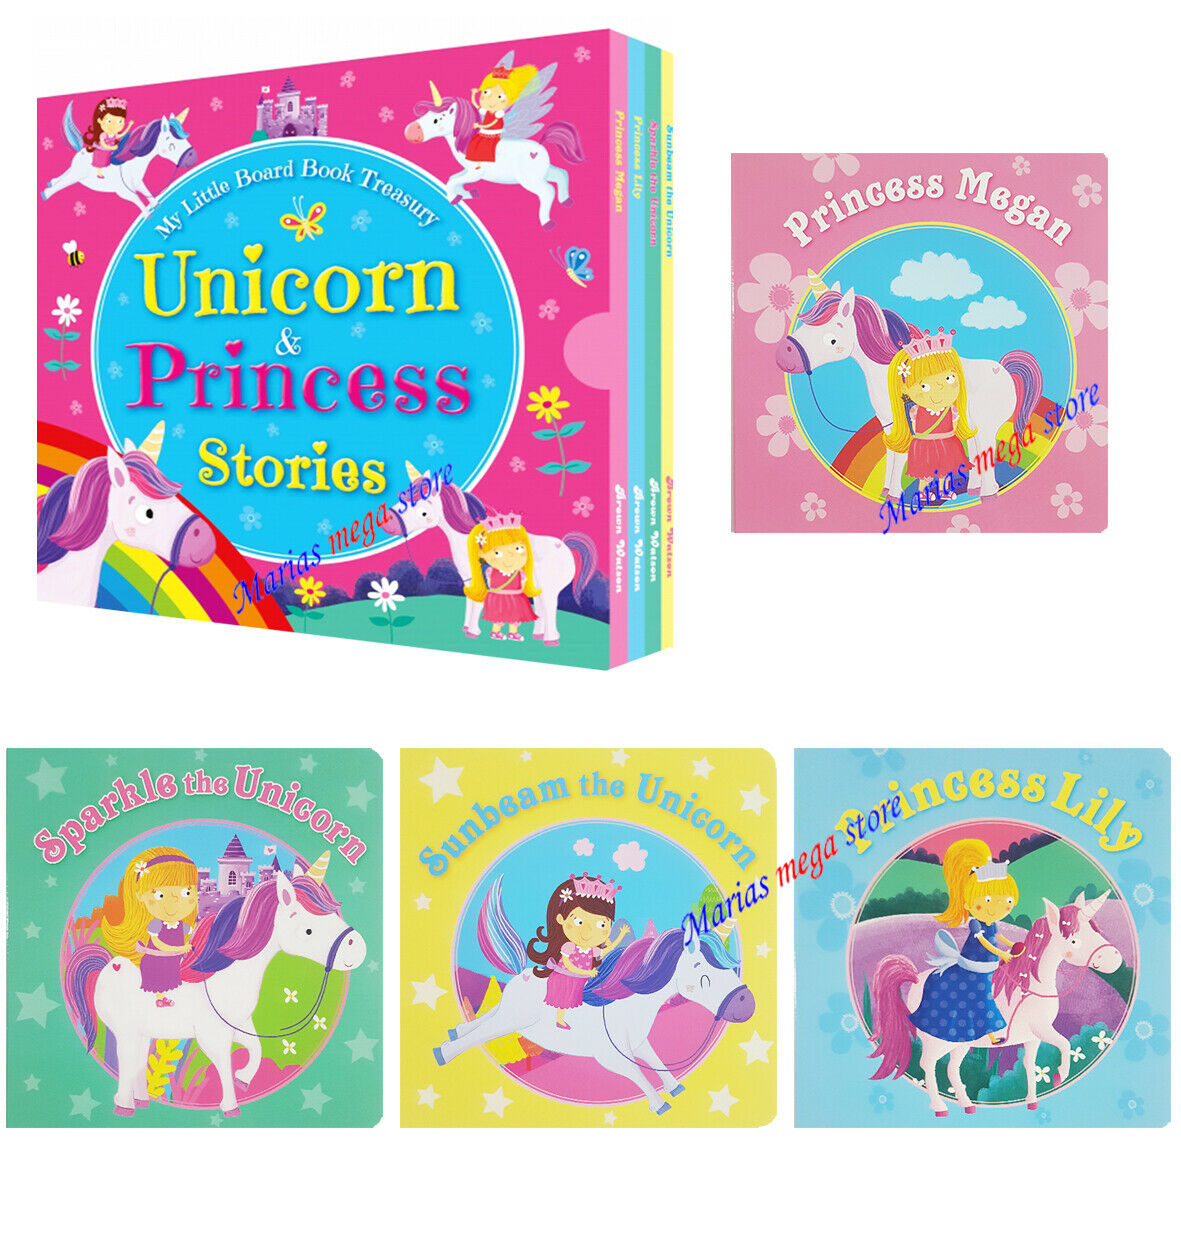 Unicorn & Princess Stories: 4 Board Books Box set